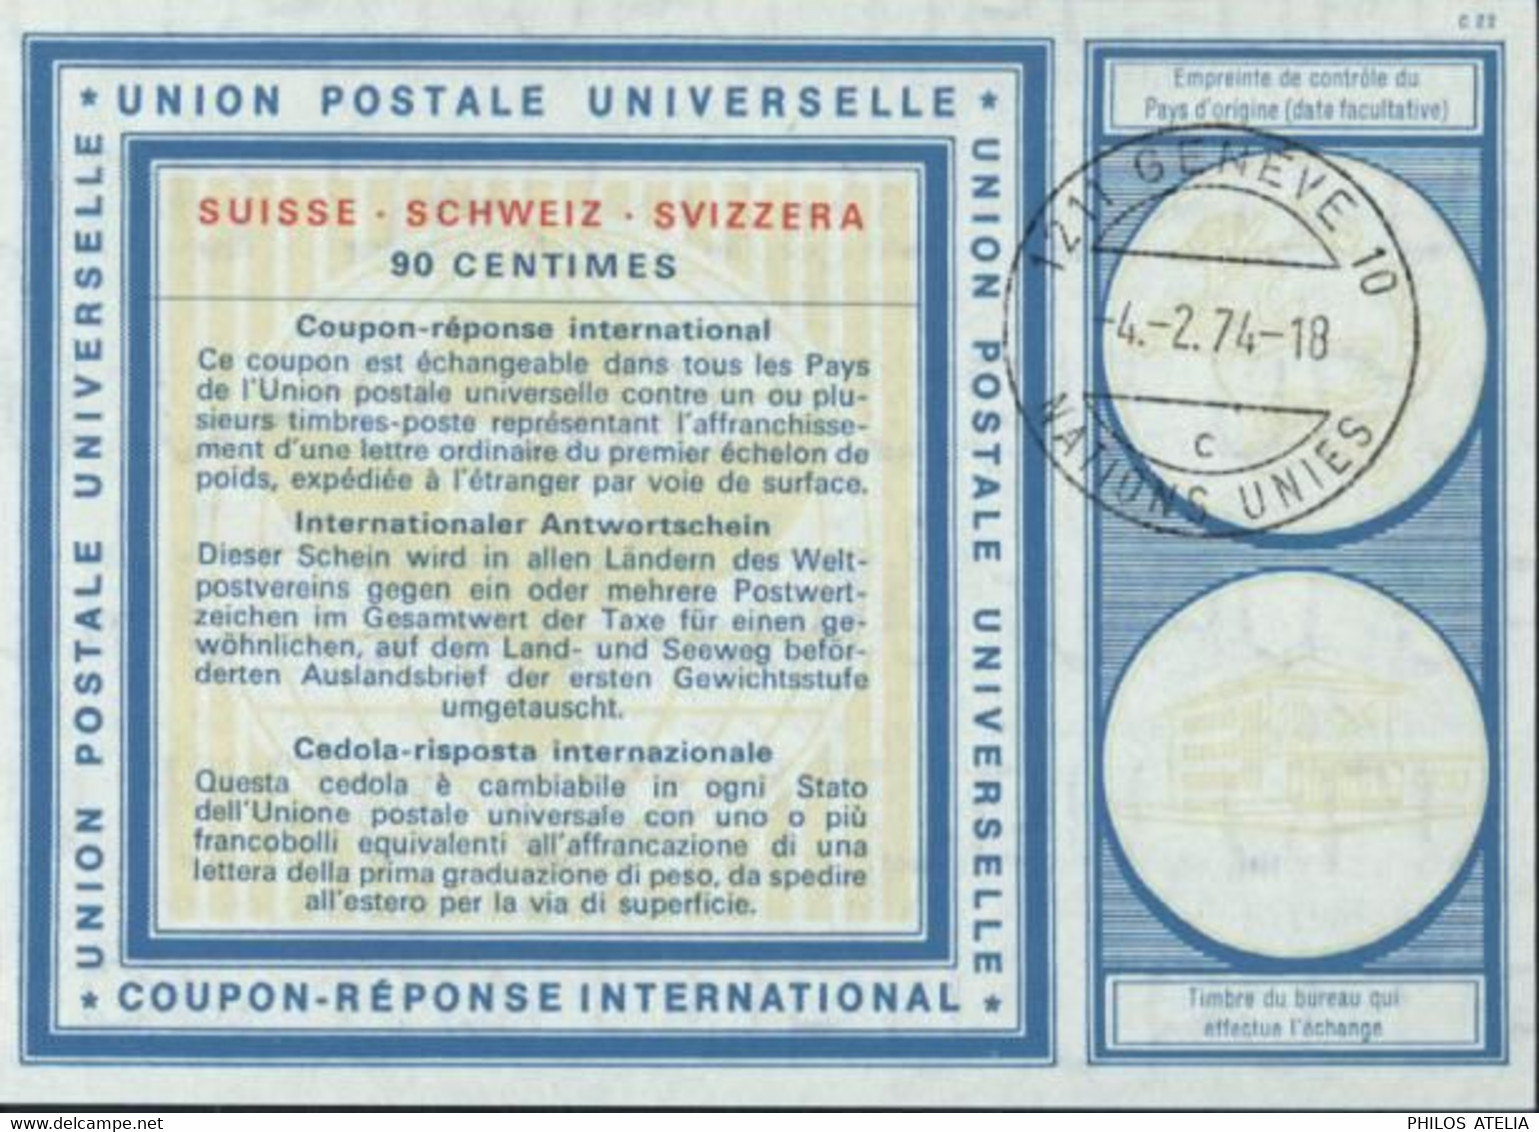 Coupon Réponse International UPU Suisse 90 Cts CAD 1211 Genève 10 Nations Unies 4 2 74 - 18 C - Covers & Documents